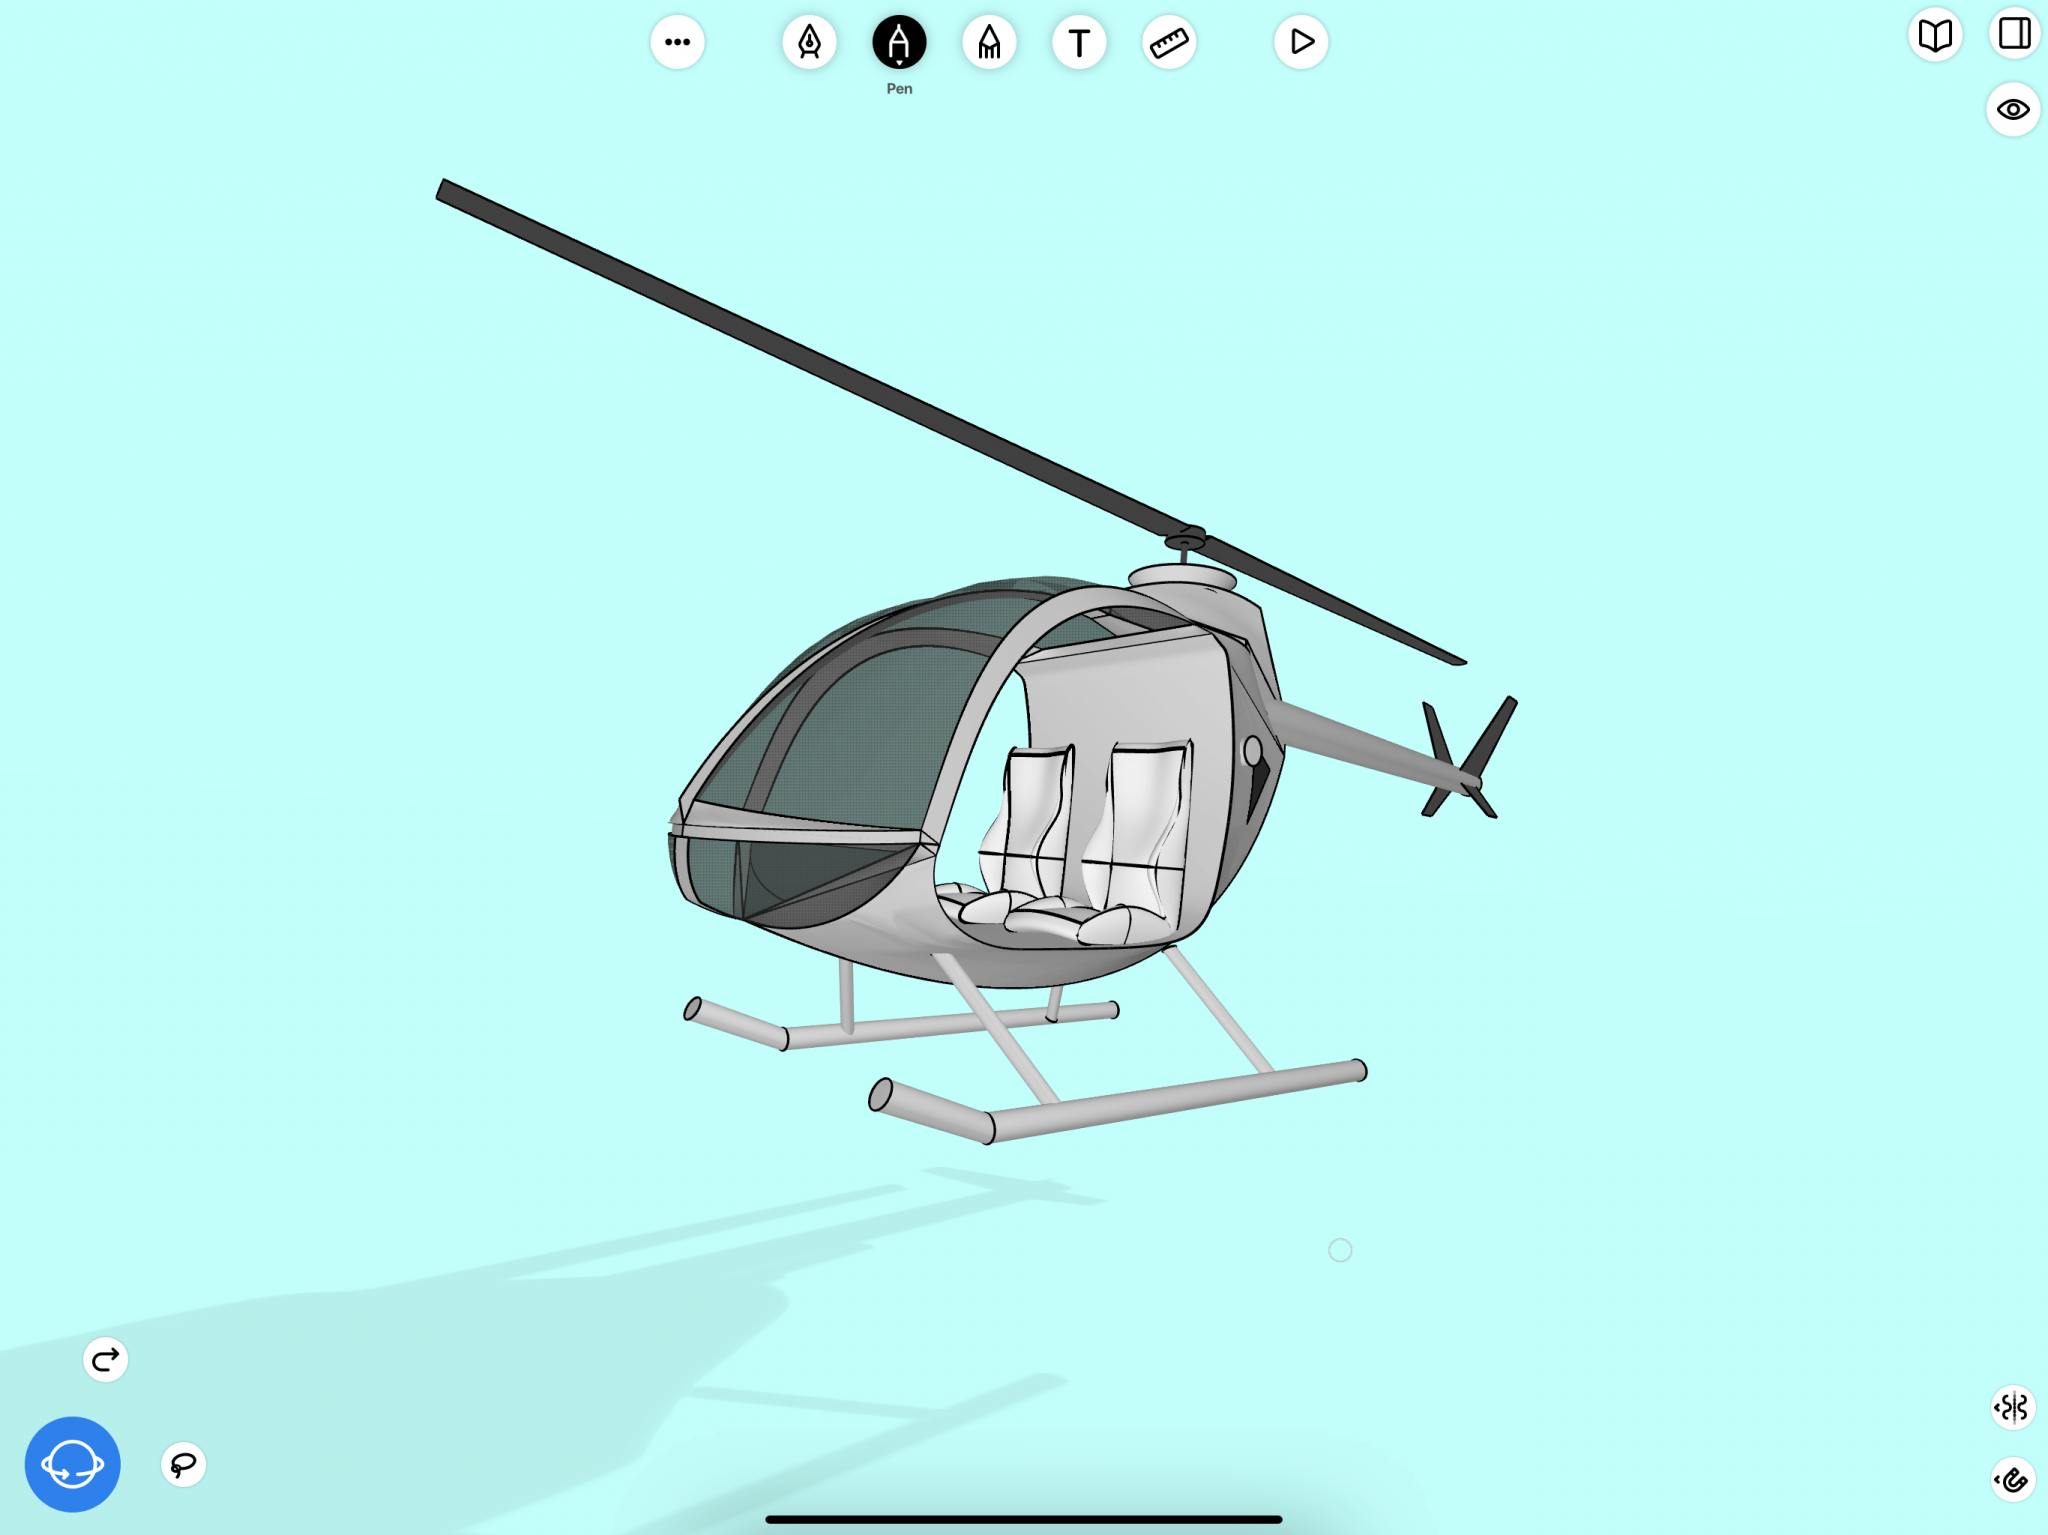 Steven Xu - Helicopter